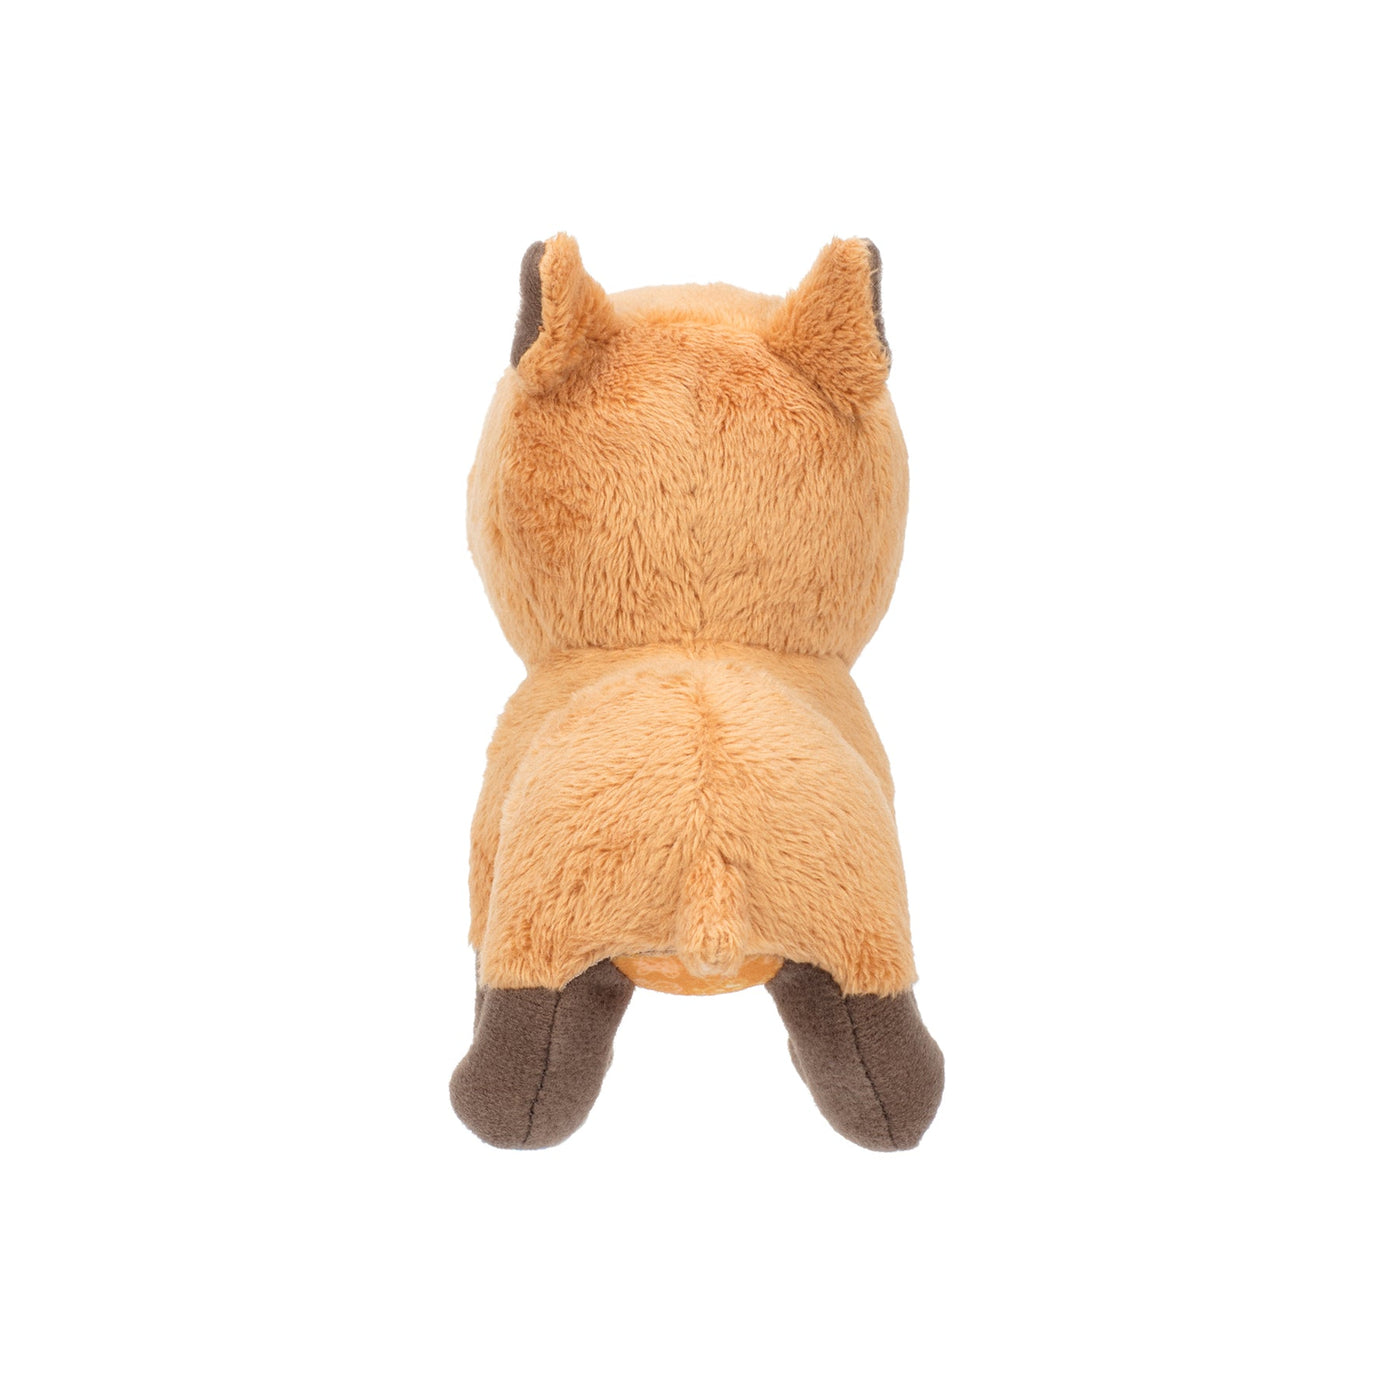 Disney Encanto 6-7" Capybara Plush Doll